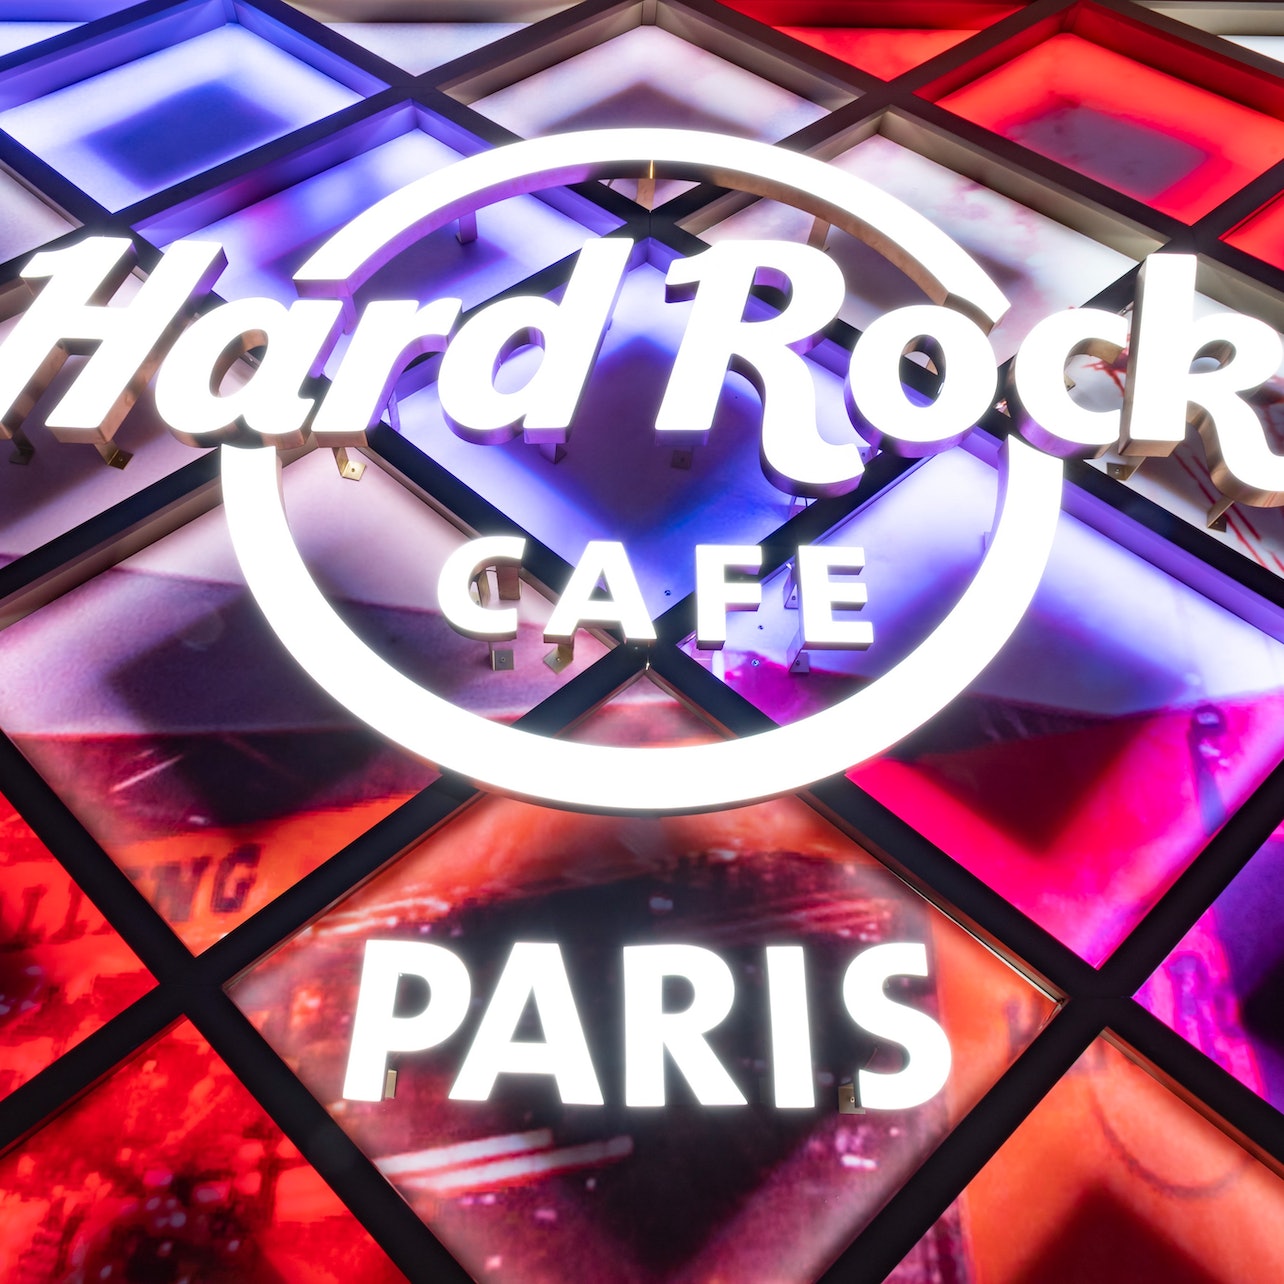 Picture of Hard Rock Cafe Paris in Paris, France